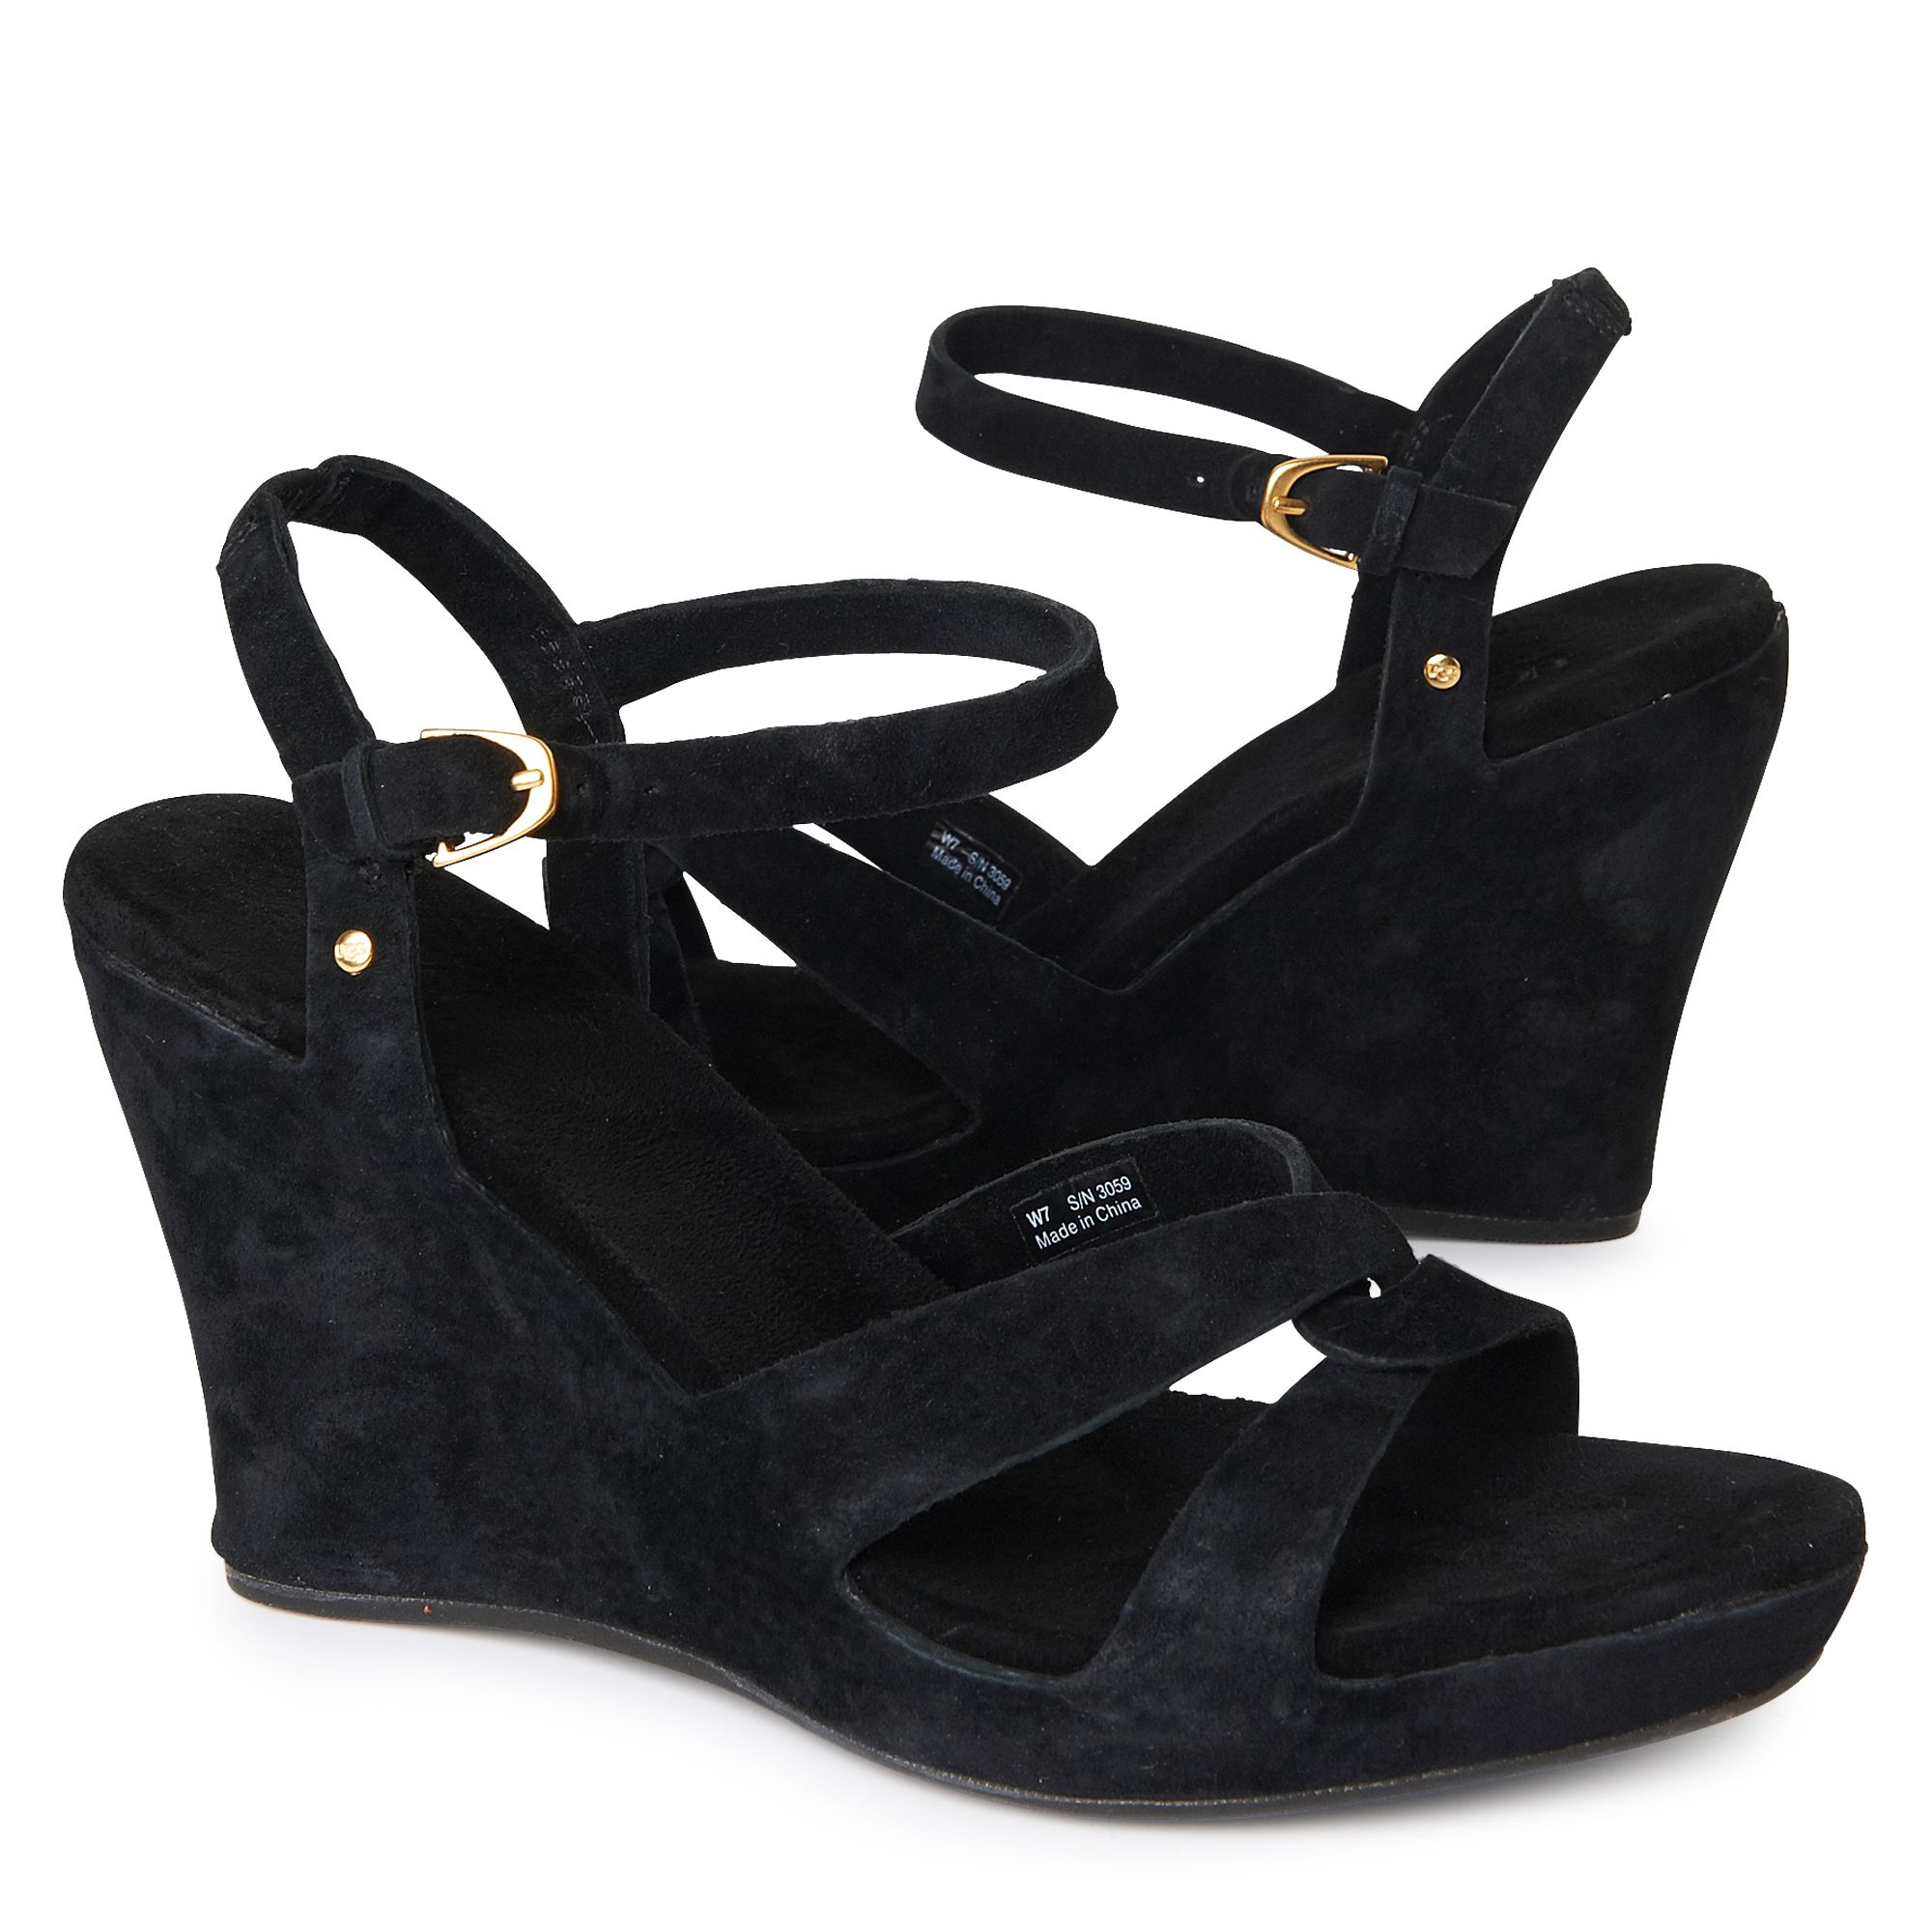 UGG Arianna Wedge Sandals in Black - Lyst